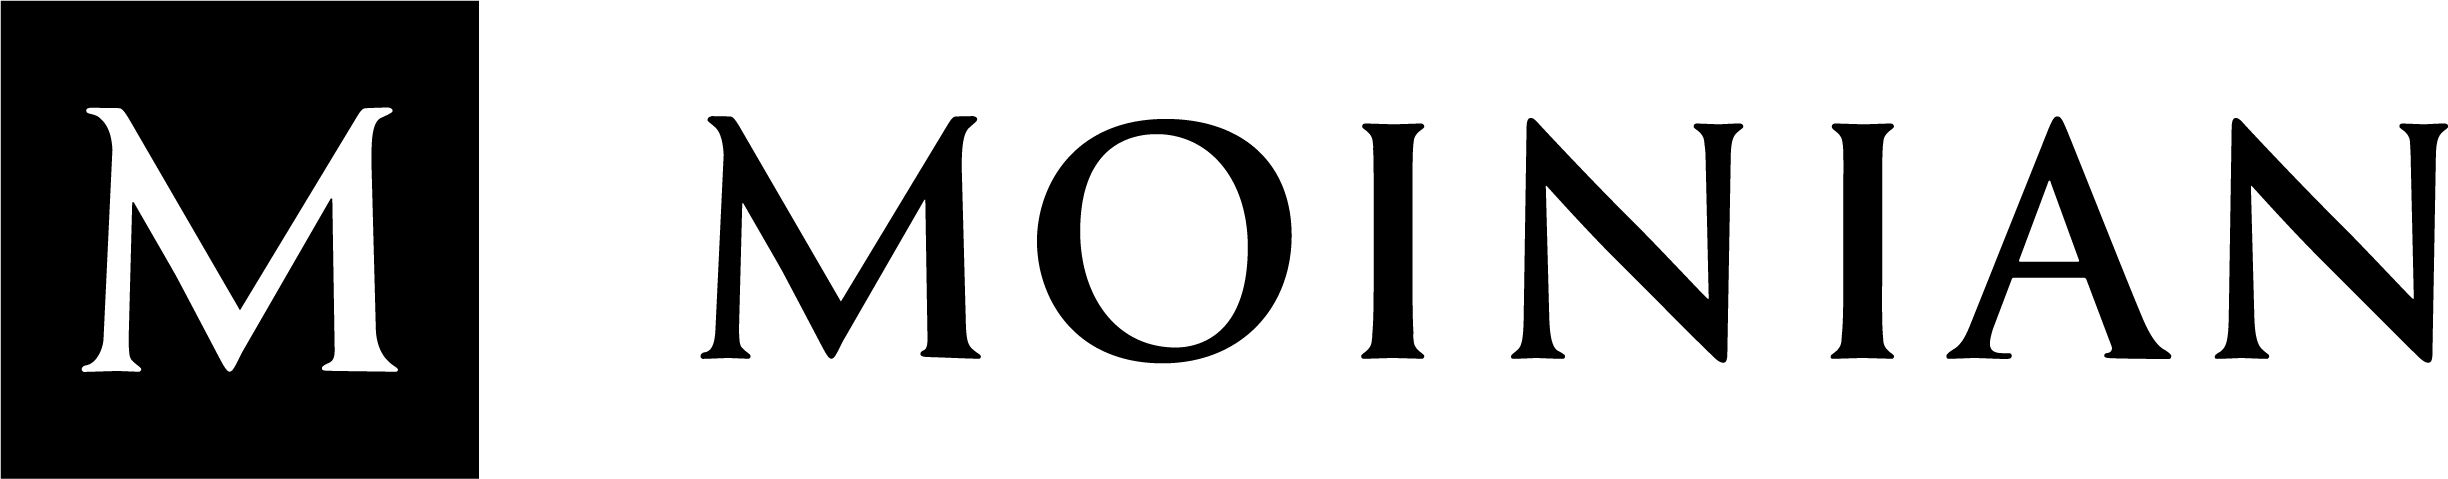 Moinian_Logo_Black.png